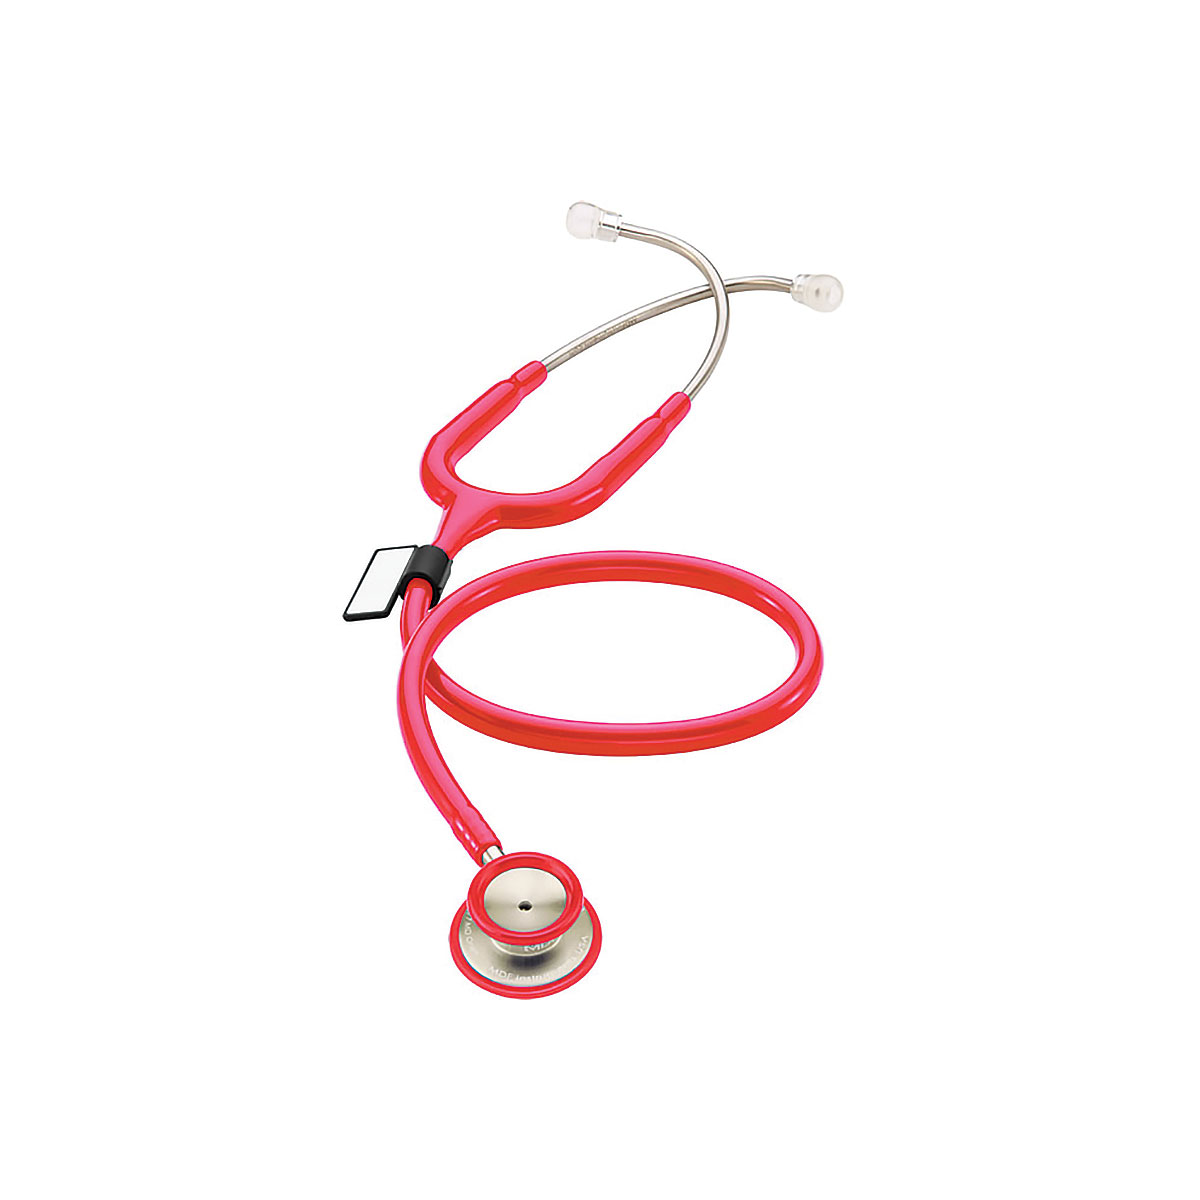 MD One® Adult Stethoscope - Raspberry